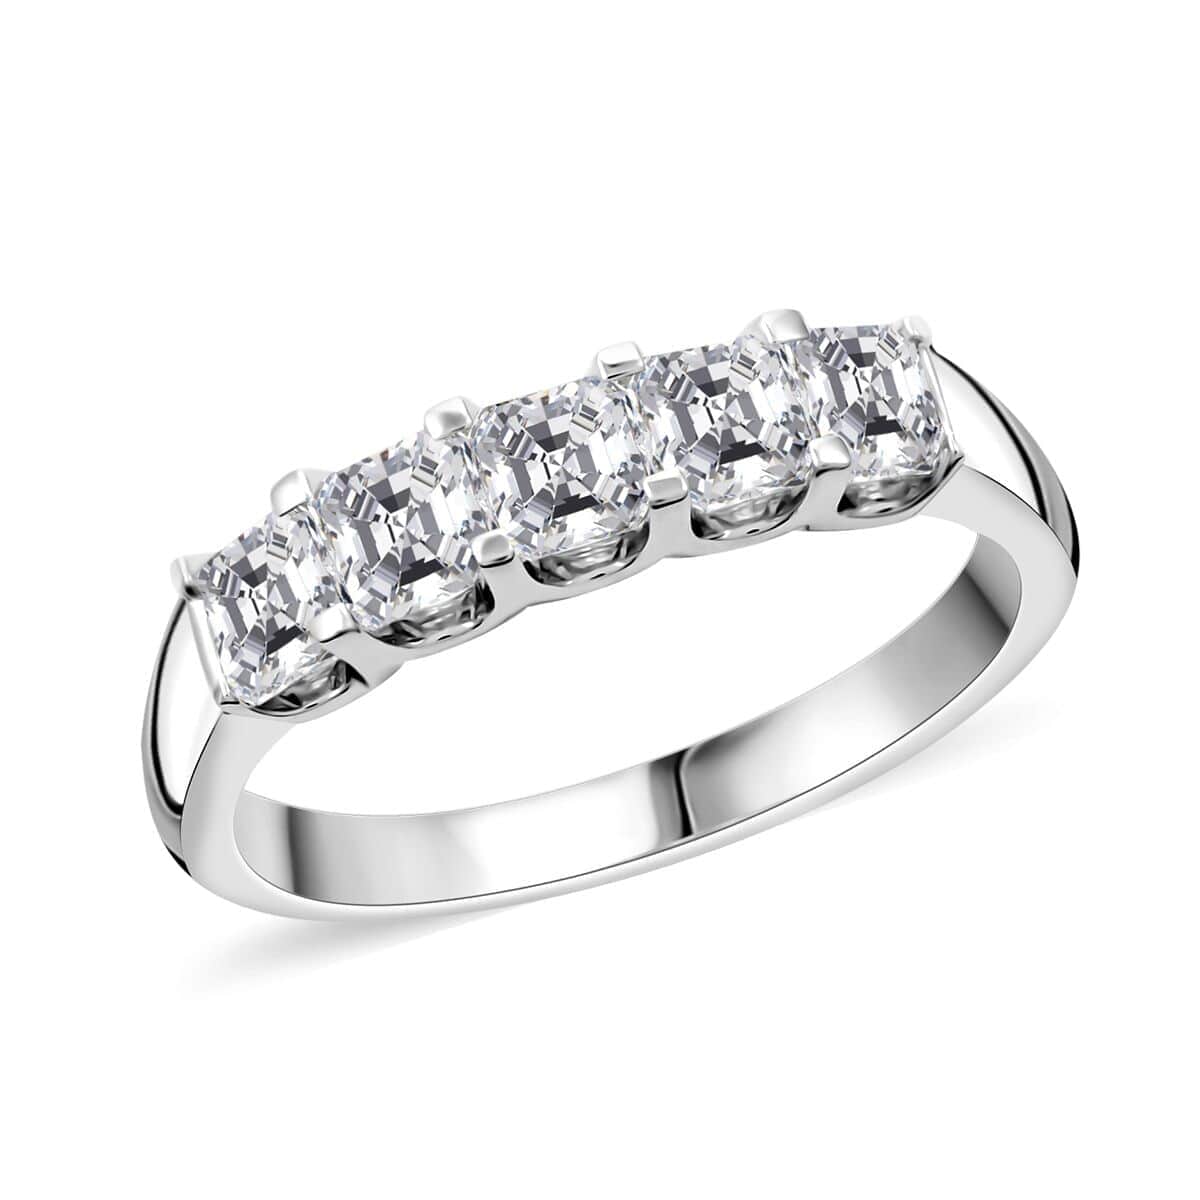 Modani 950 Platinum White Diamond E-F VS2 Ring (Size 7.0) 4.96 Grams 1.17 ctw (Del. in 10-12 Days) image number 0